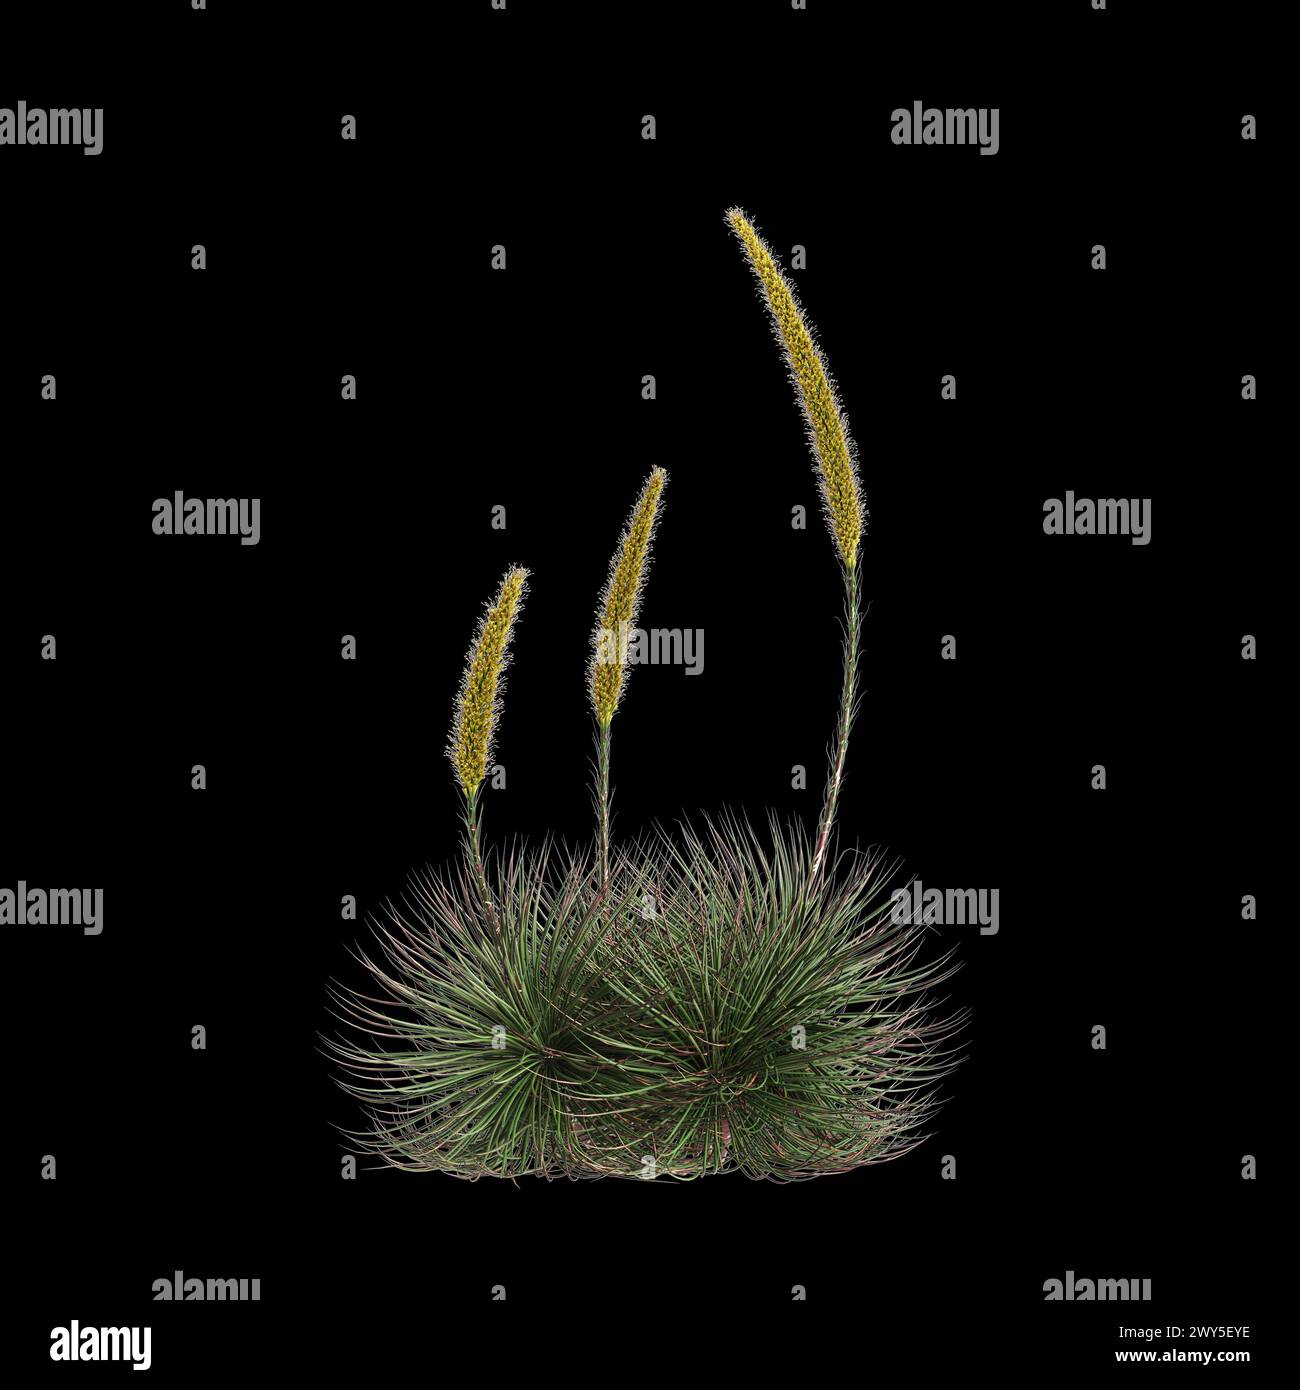 3d illustration of Agave stricta bush isolated on black background Stock Photo